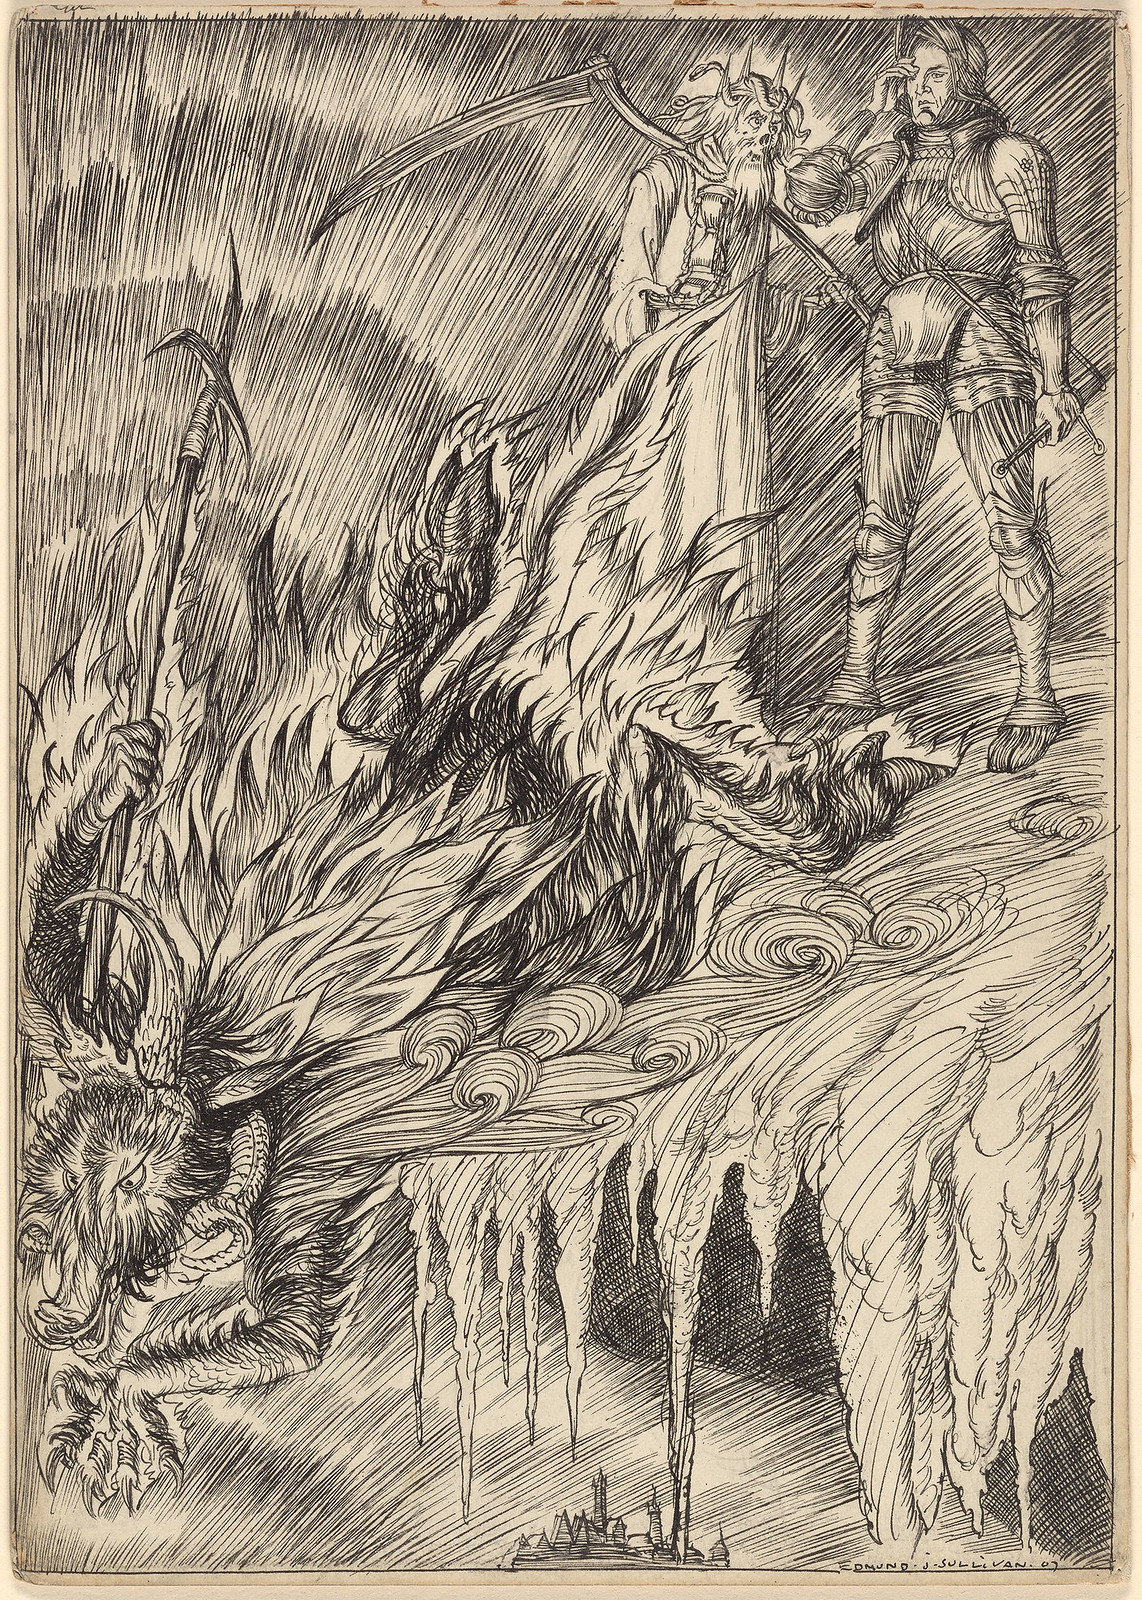 Edmund Joseph Sullivan - The dwarf, shuddering and scolding, leapt away into a dark ravine, 1907